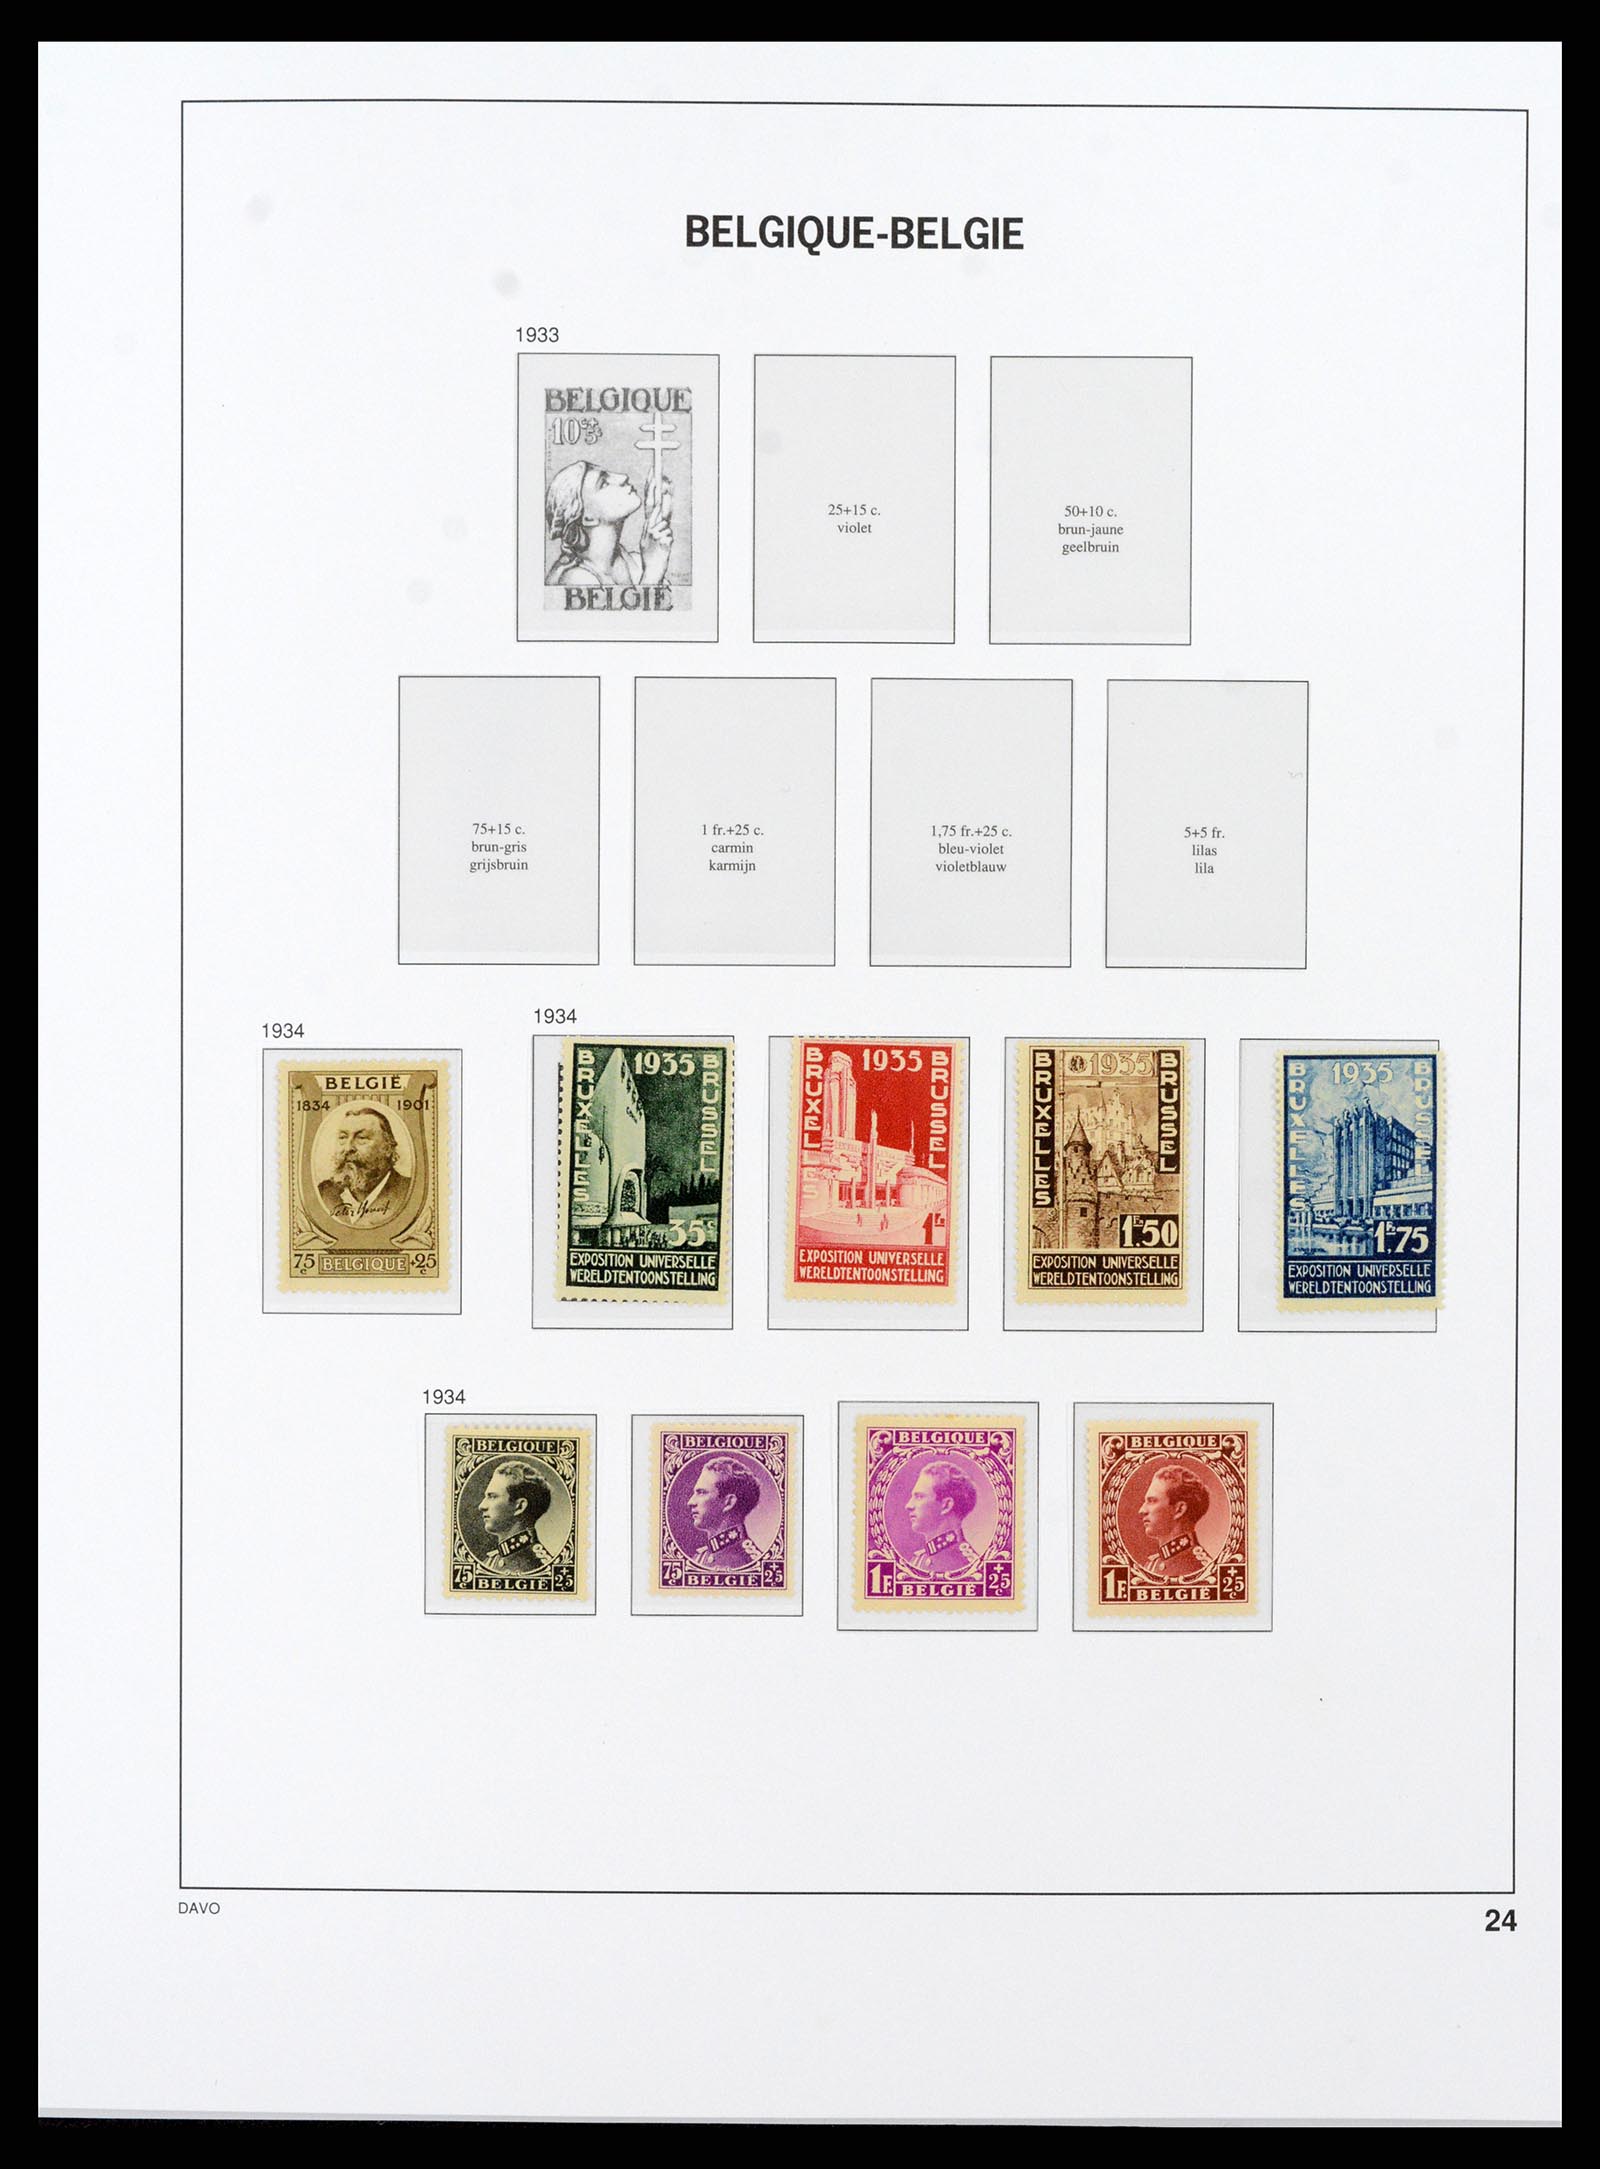 38073 020 - Stamp collection 38073 Belgium 1849-1950.